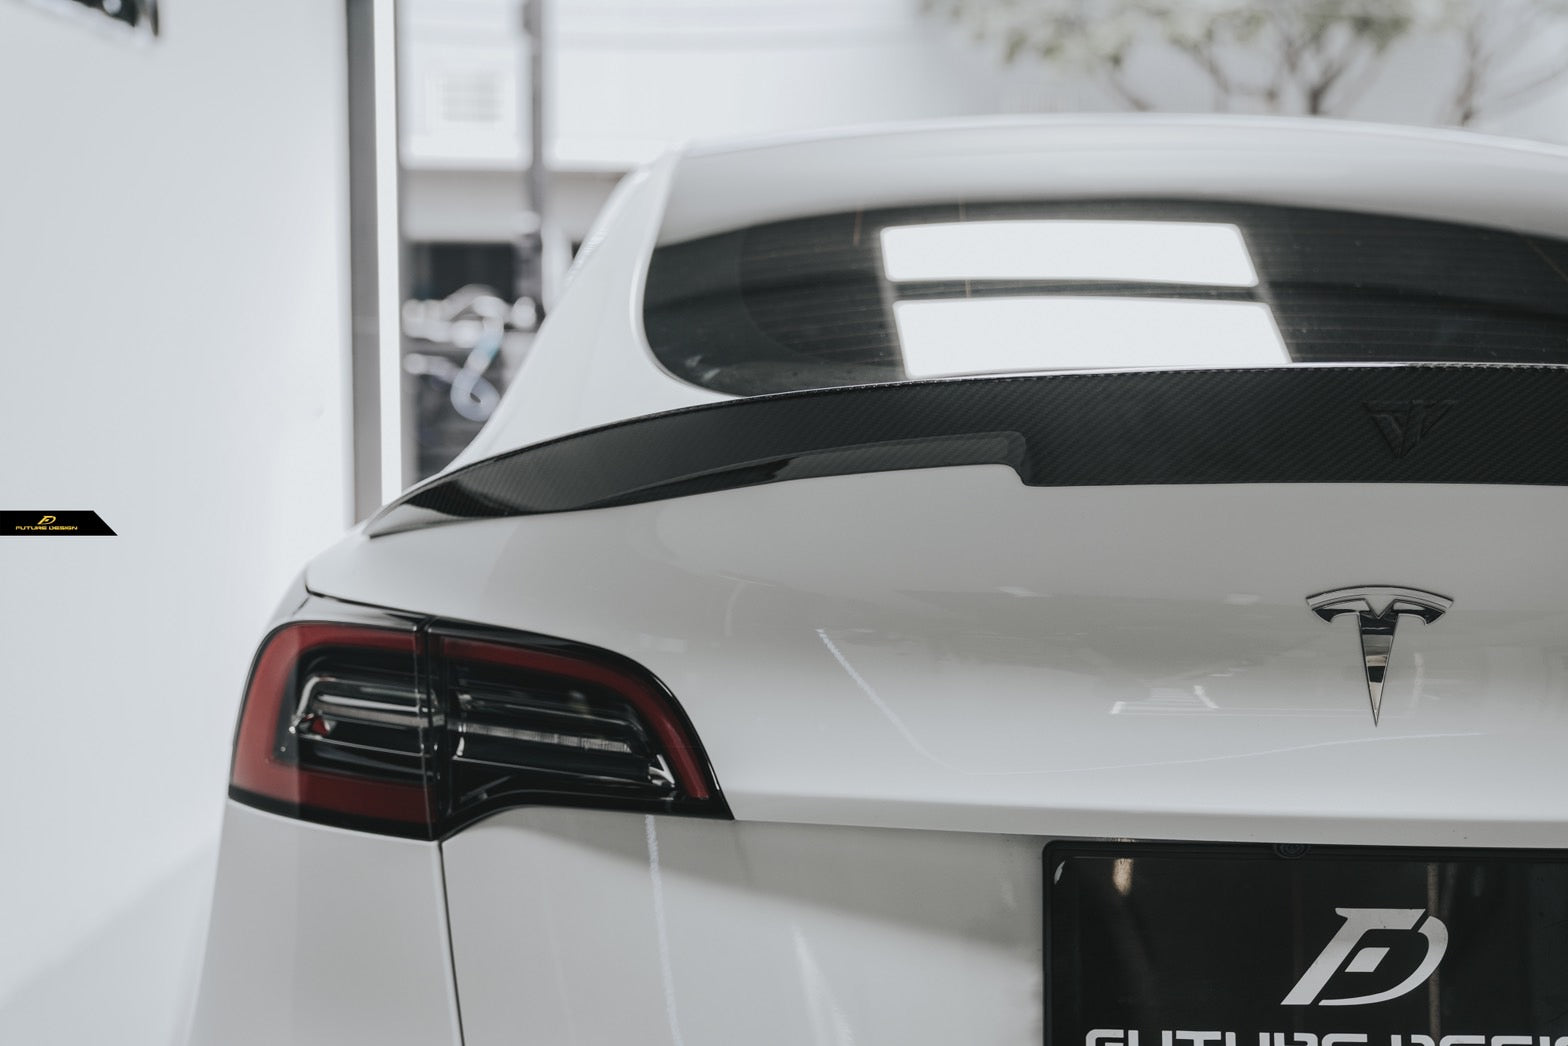 Aileron de coffre arrière en fibre de carbone Tesla Model Y Future Design V2